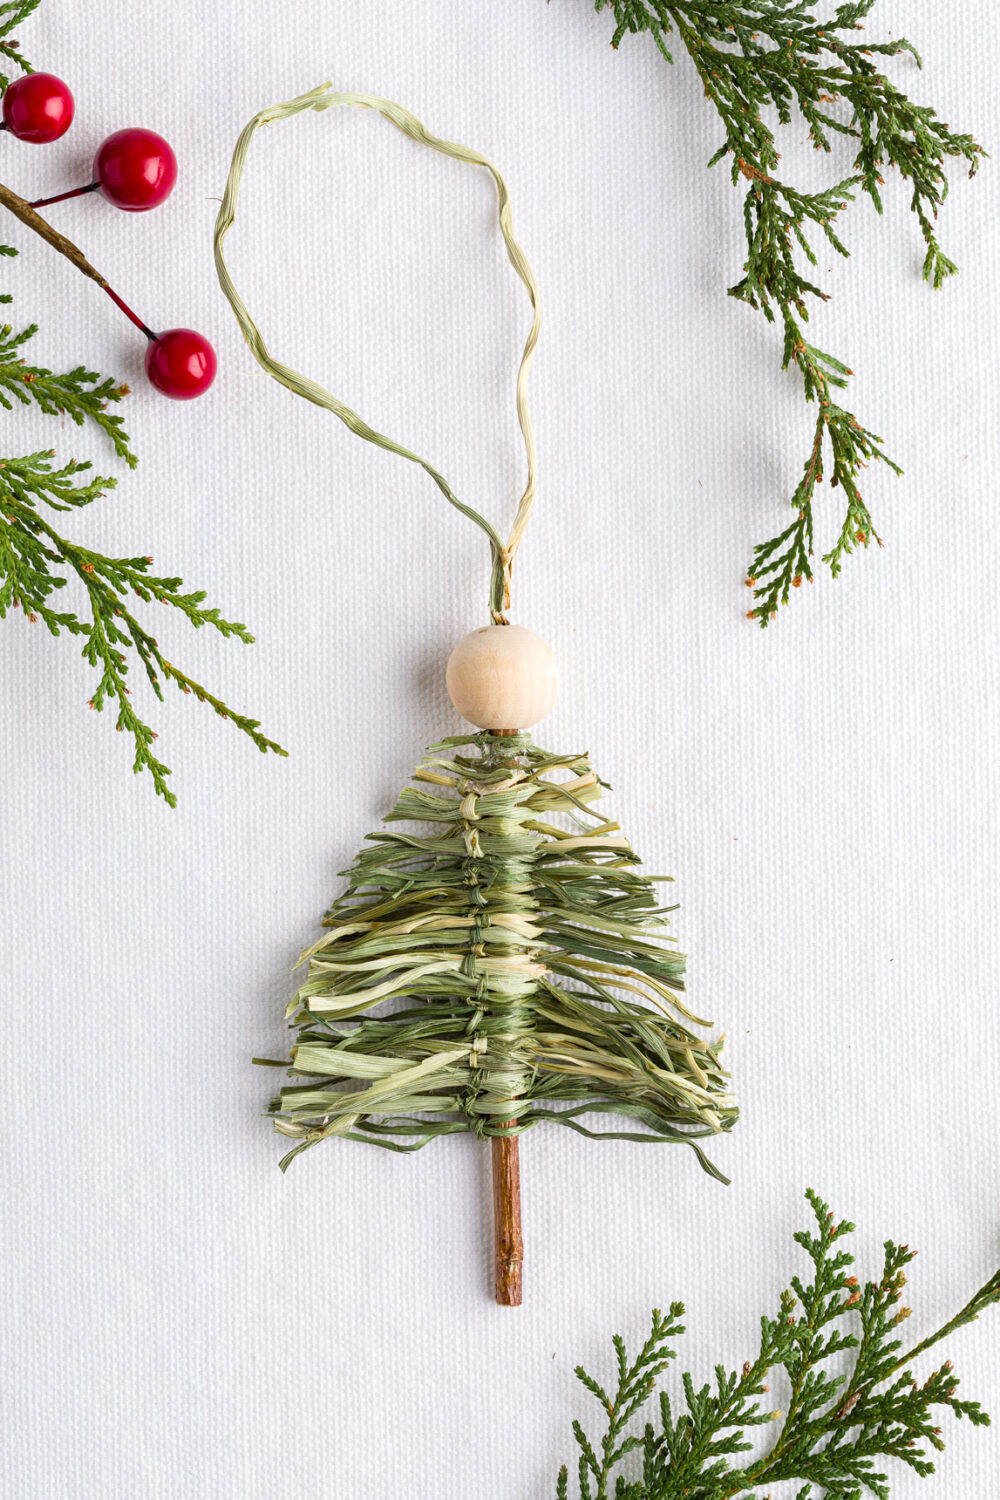 How to Make Rustic Macrame Christmas Ornaments - Olivia OHern